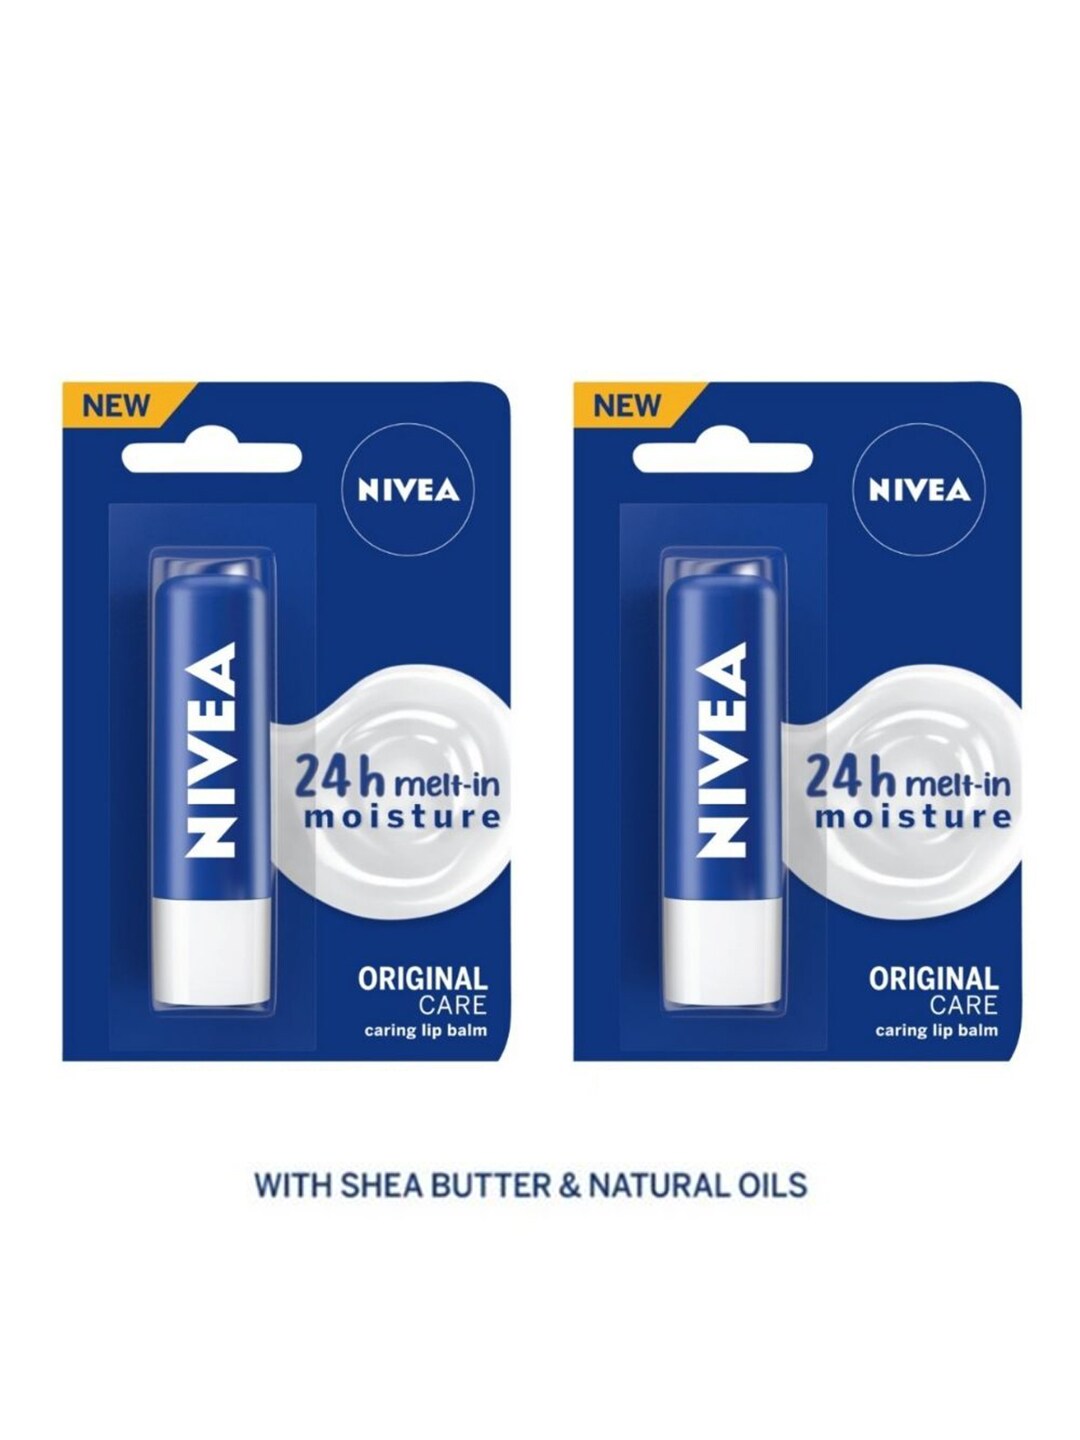 Nivea Set of 2 24 Hr Melt-In Moisture Original Care Lip Balm Price in India